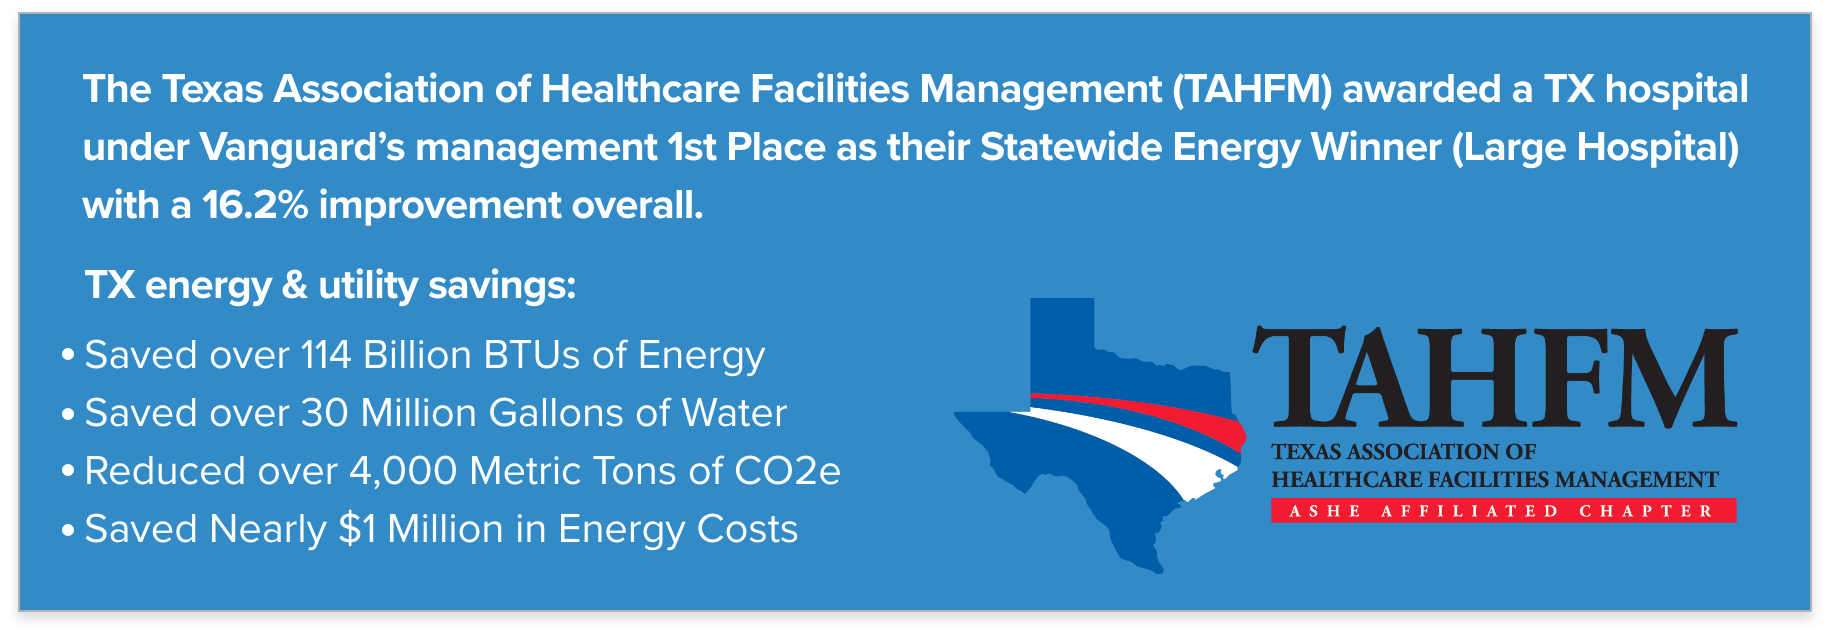 Texas Association of Healthcare Facilities Management